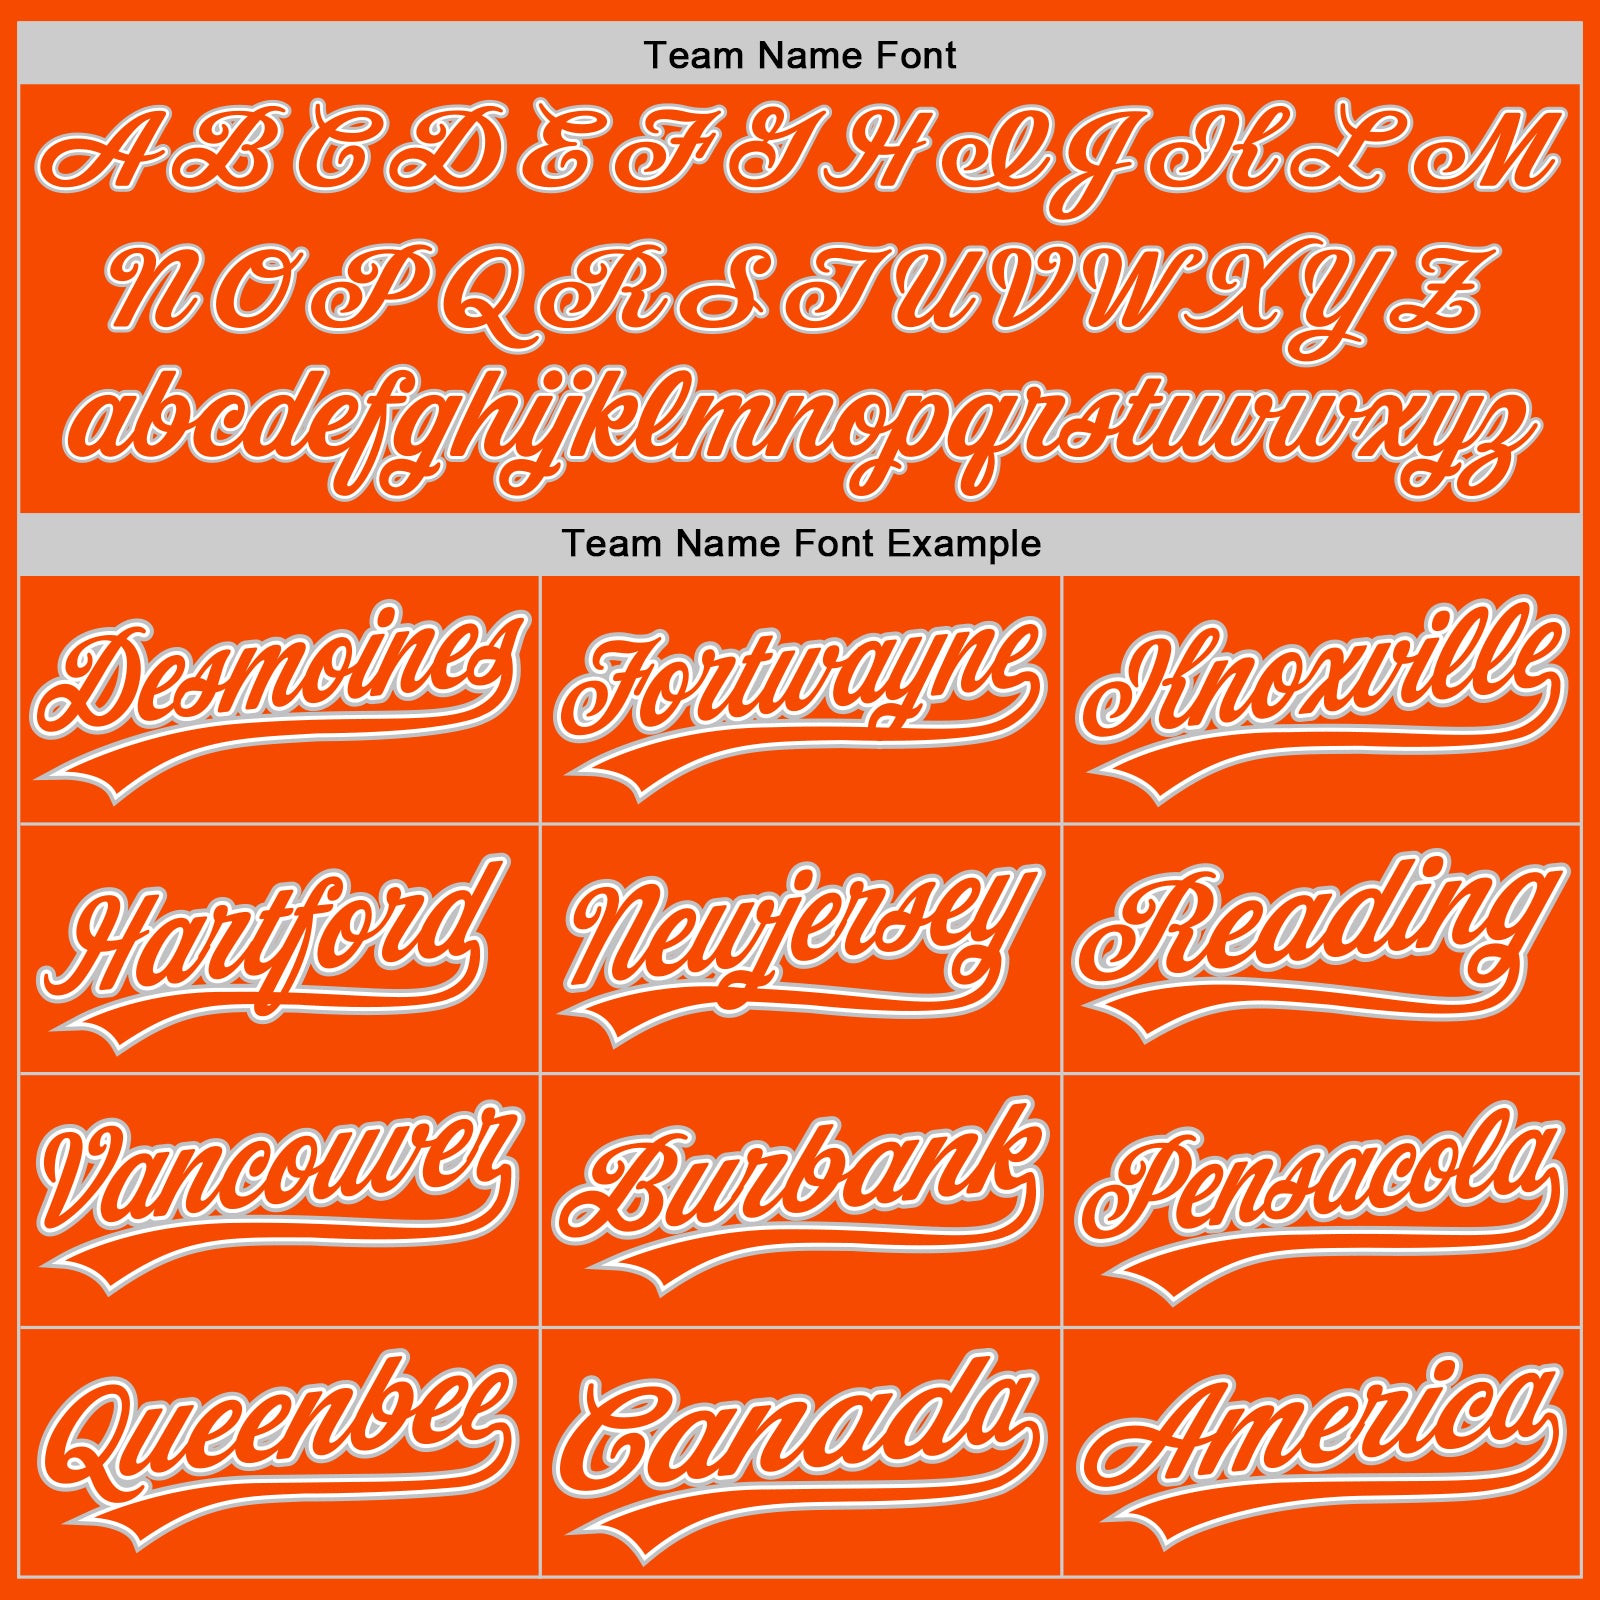 Custom Orange Orange-Gray Authentic Baseball Jersey Discount